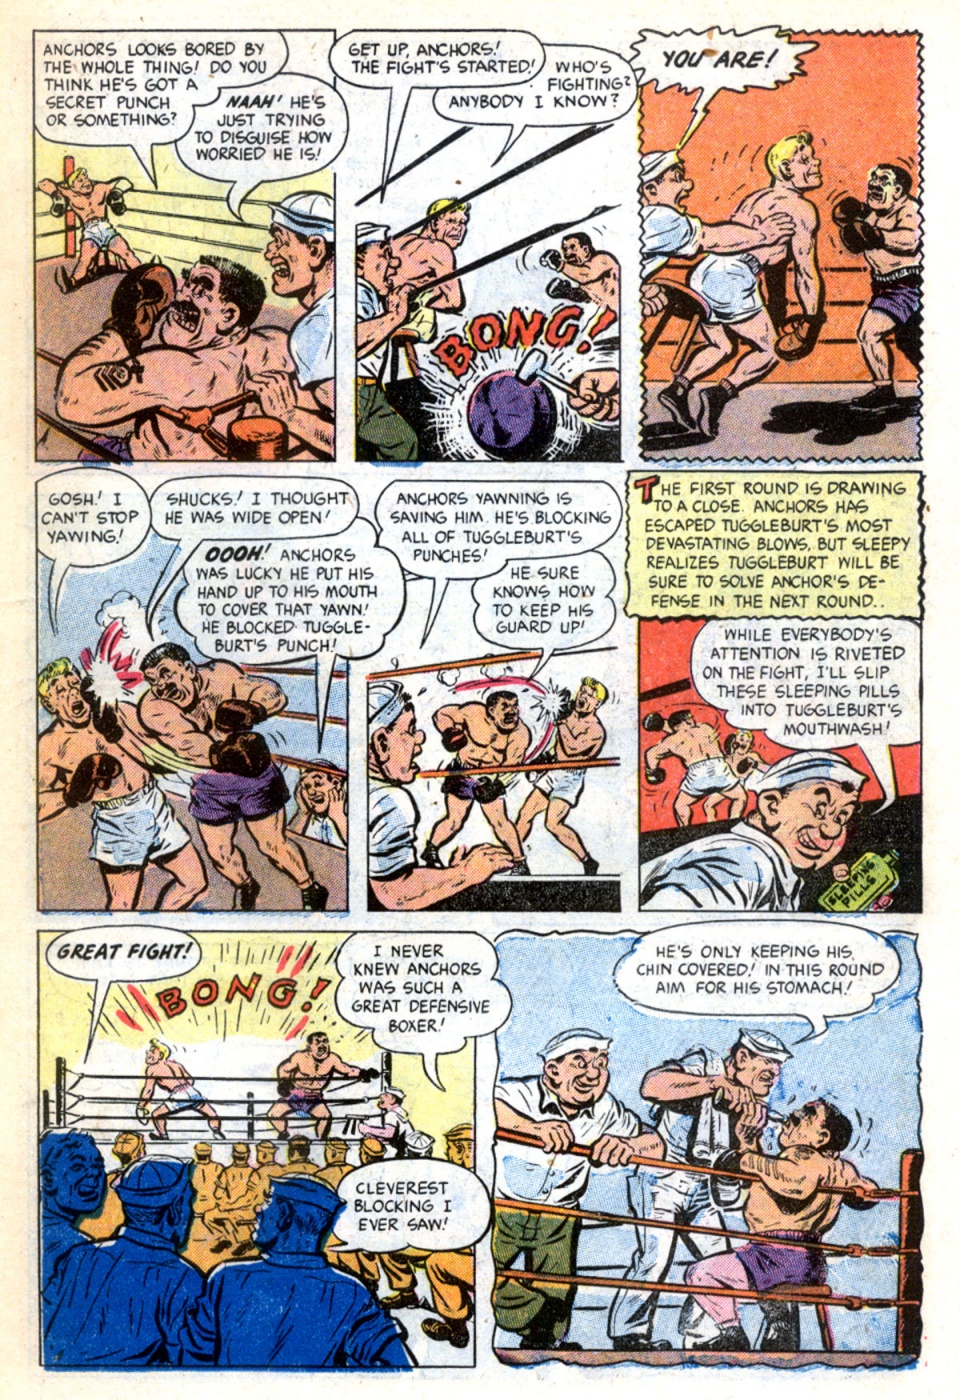 Anchors the Salt Water Daffy - Comics (15)